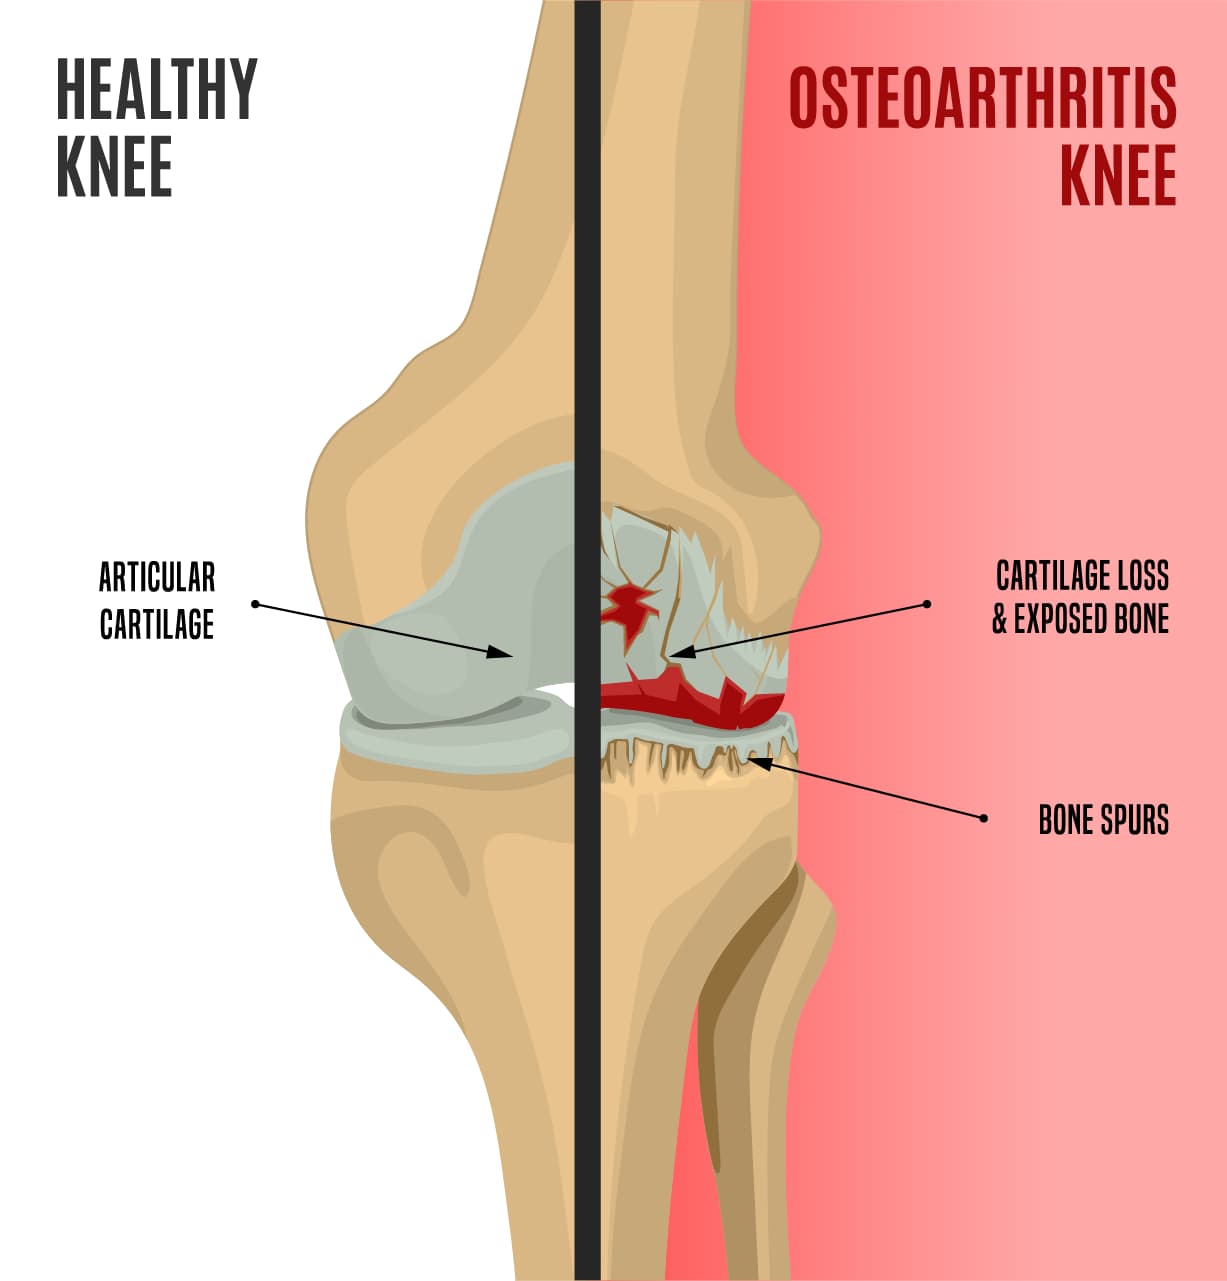 medical illustration of healthy knee versus knee with Osteoarthritis